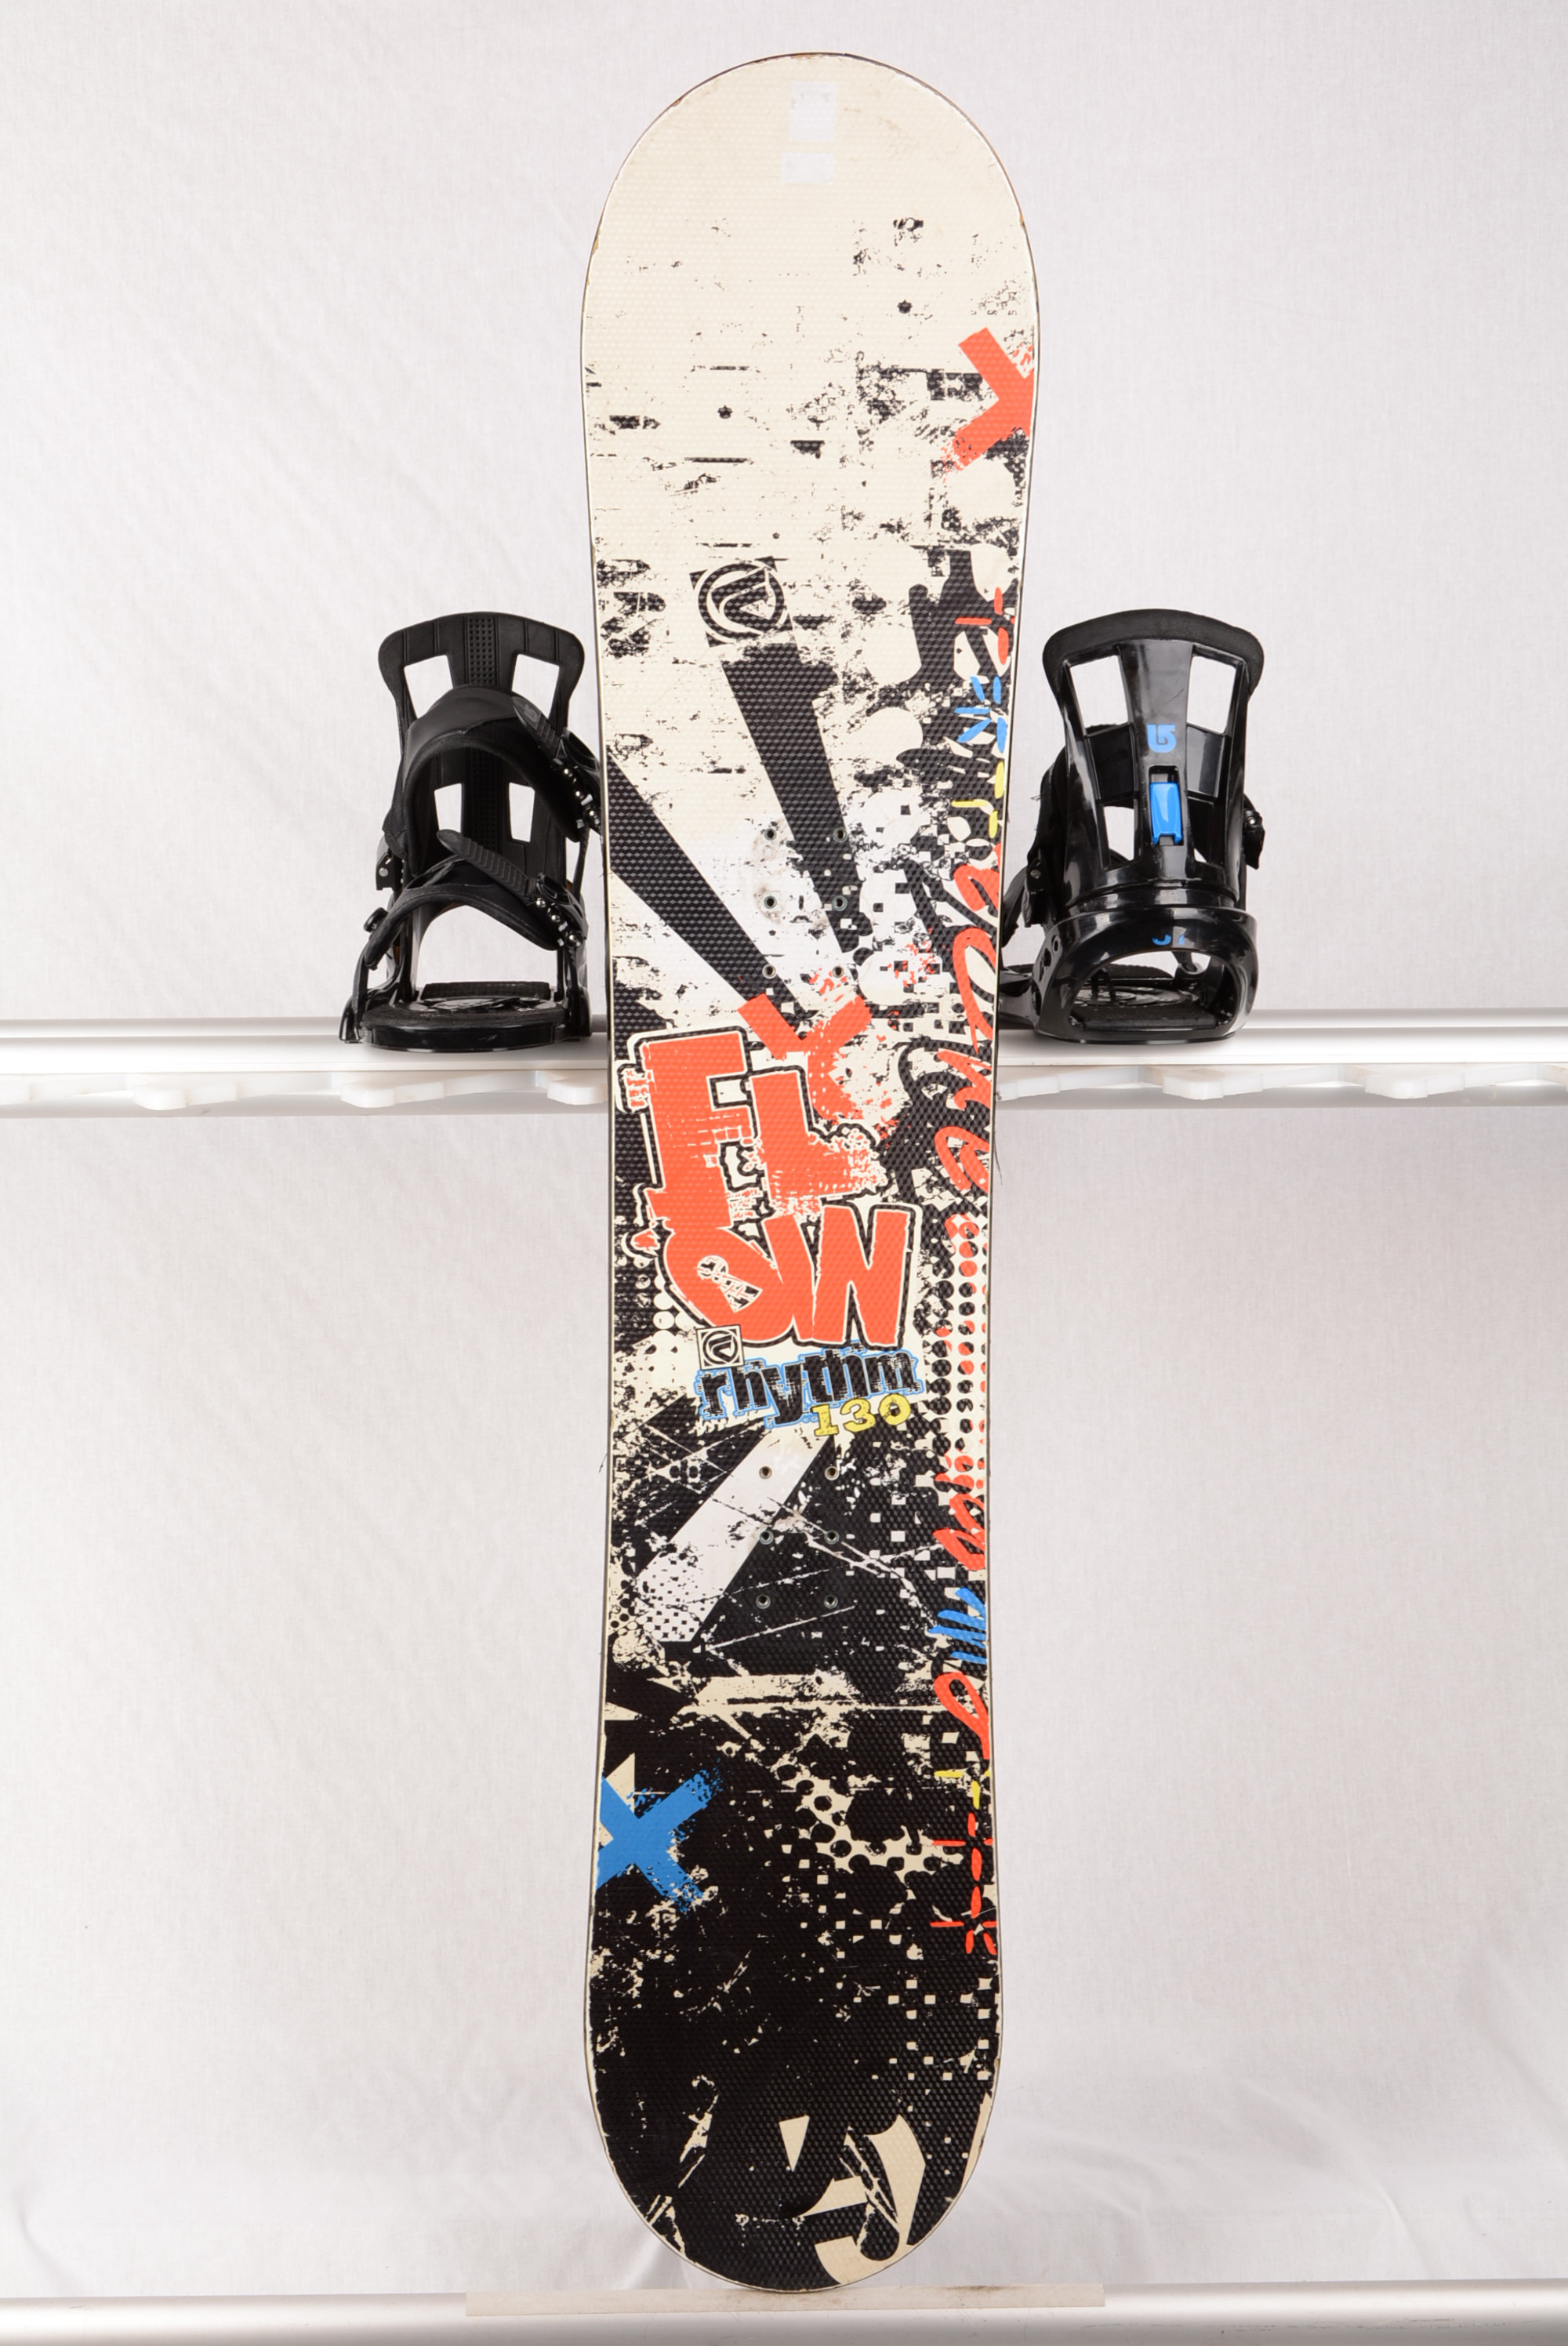 snowboard FLOW RHYTHM, Black/white/red, WOODCORE, sidewall, HYBRID/rocker